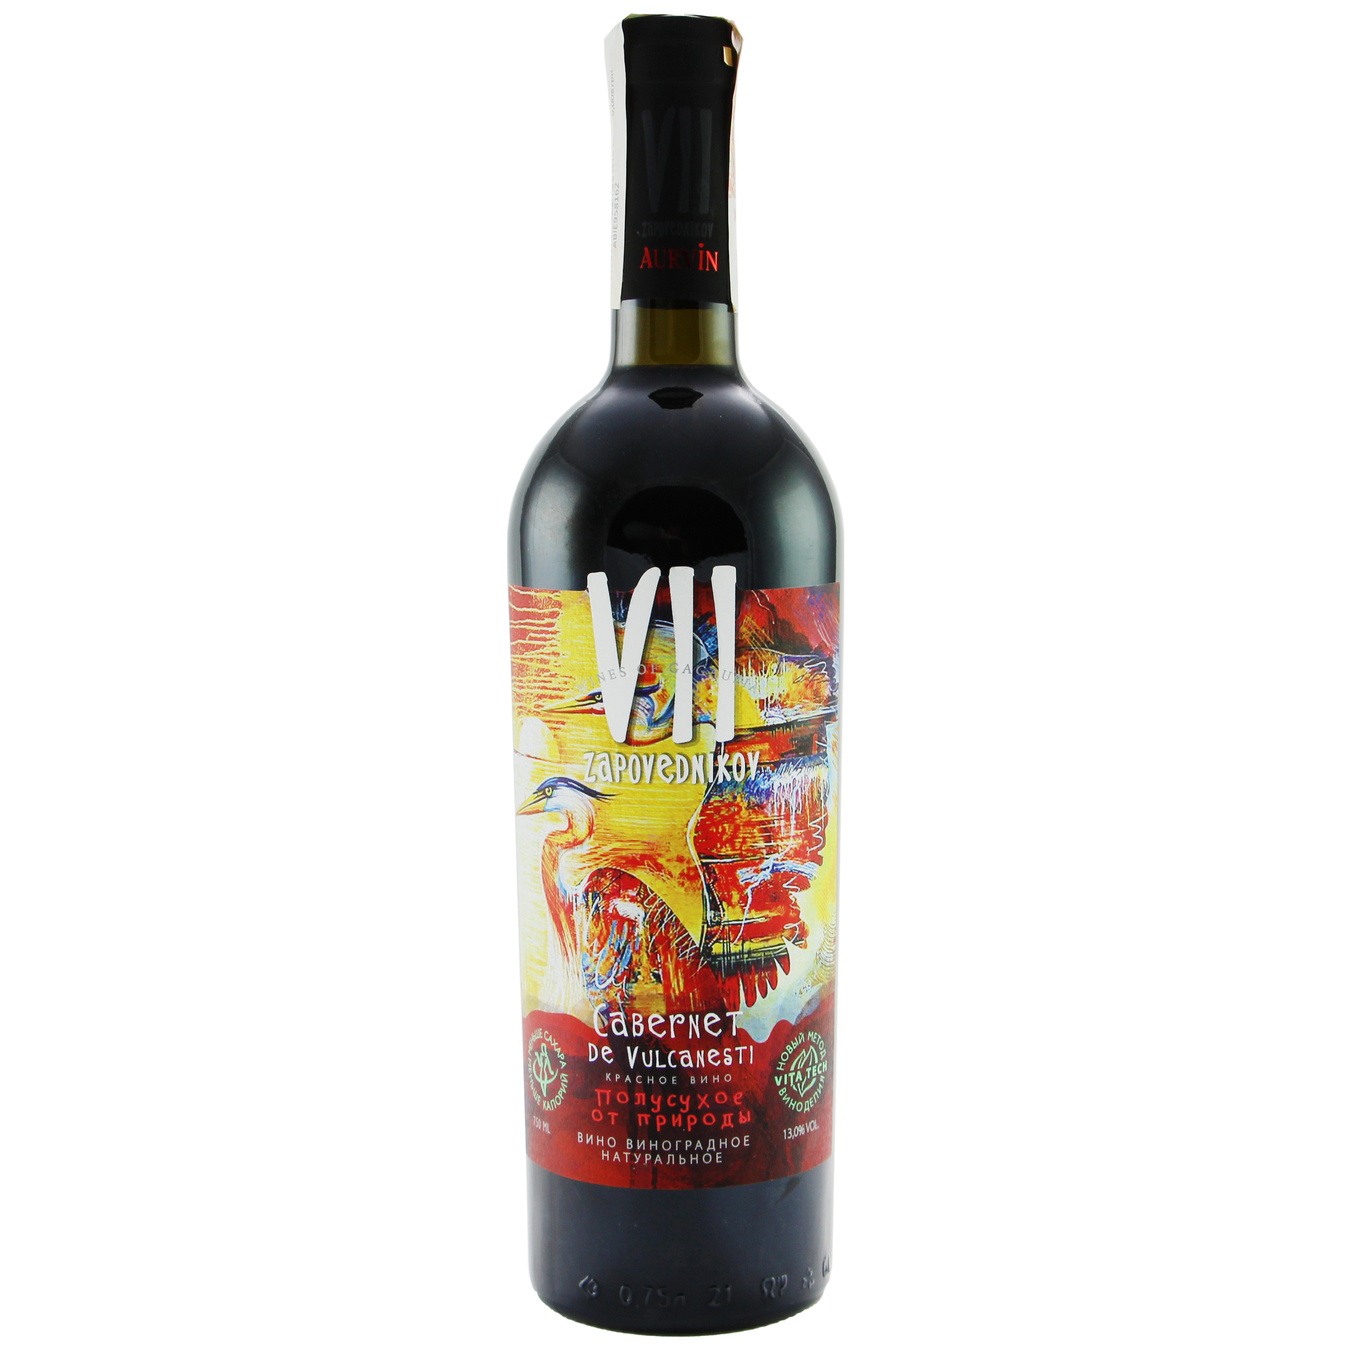 Aurvin VII Zapovednikov Cabernet De Vulcanesti Red Semi-Dry Wine 14% 0,75l